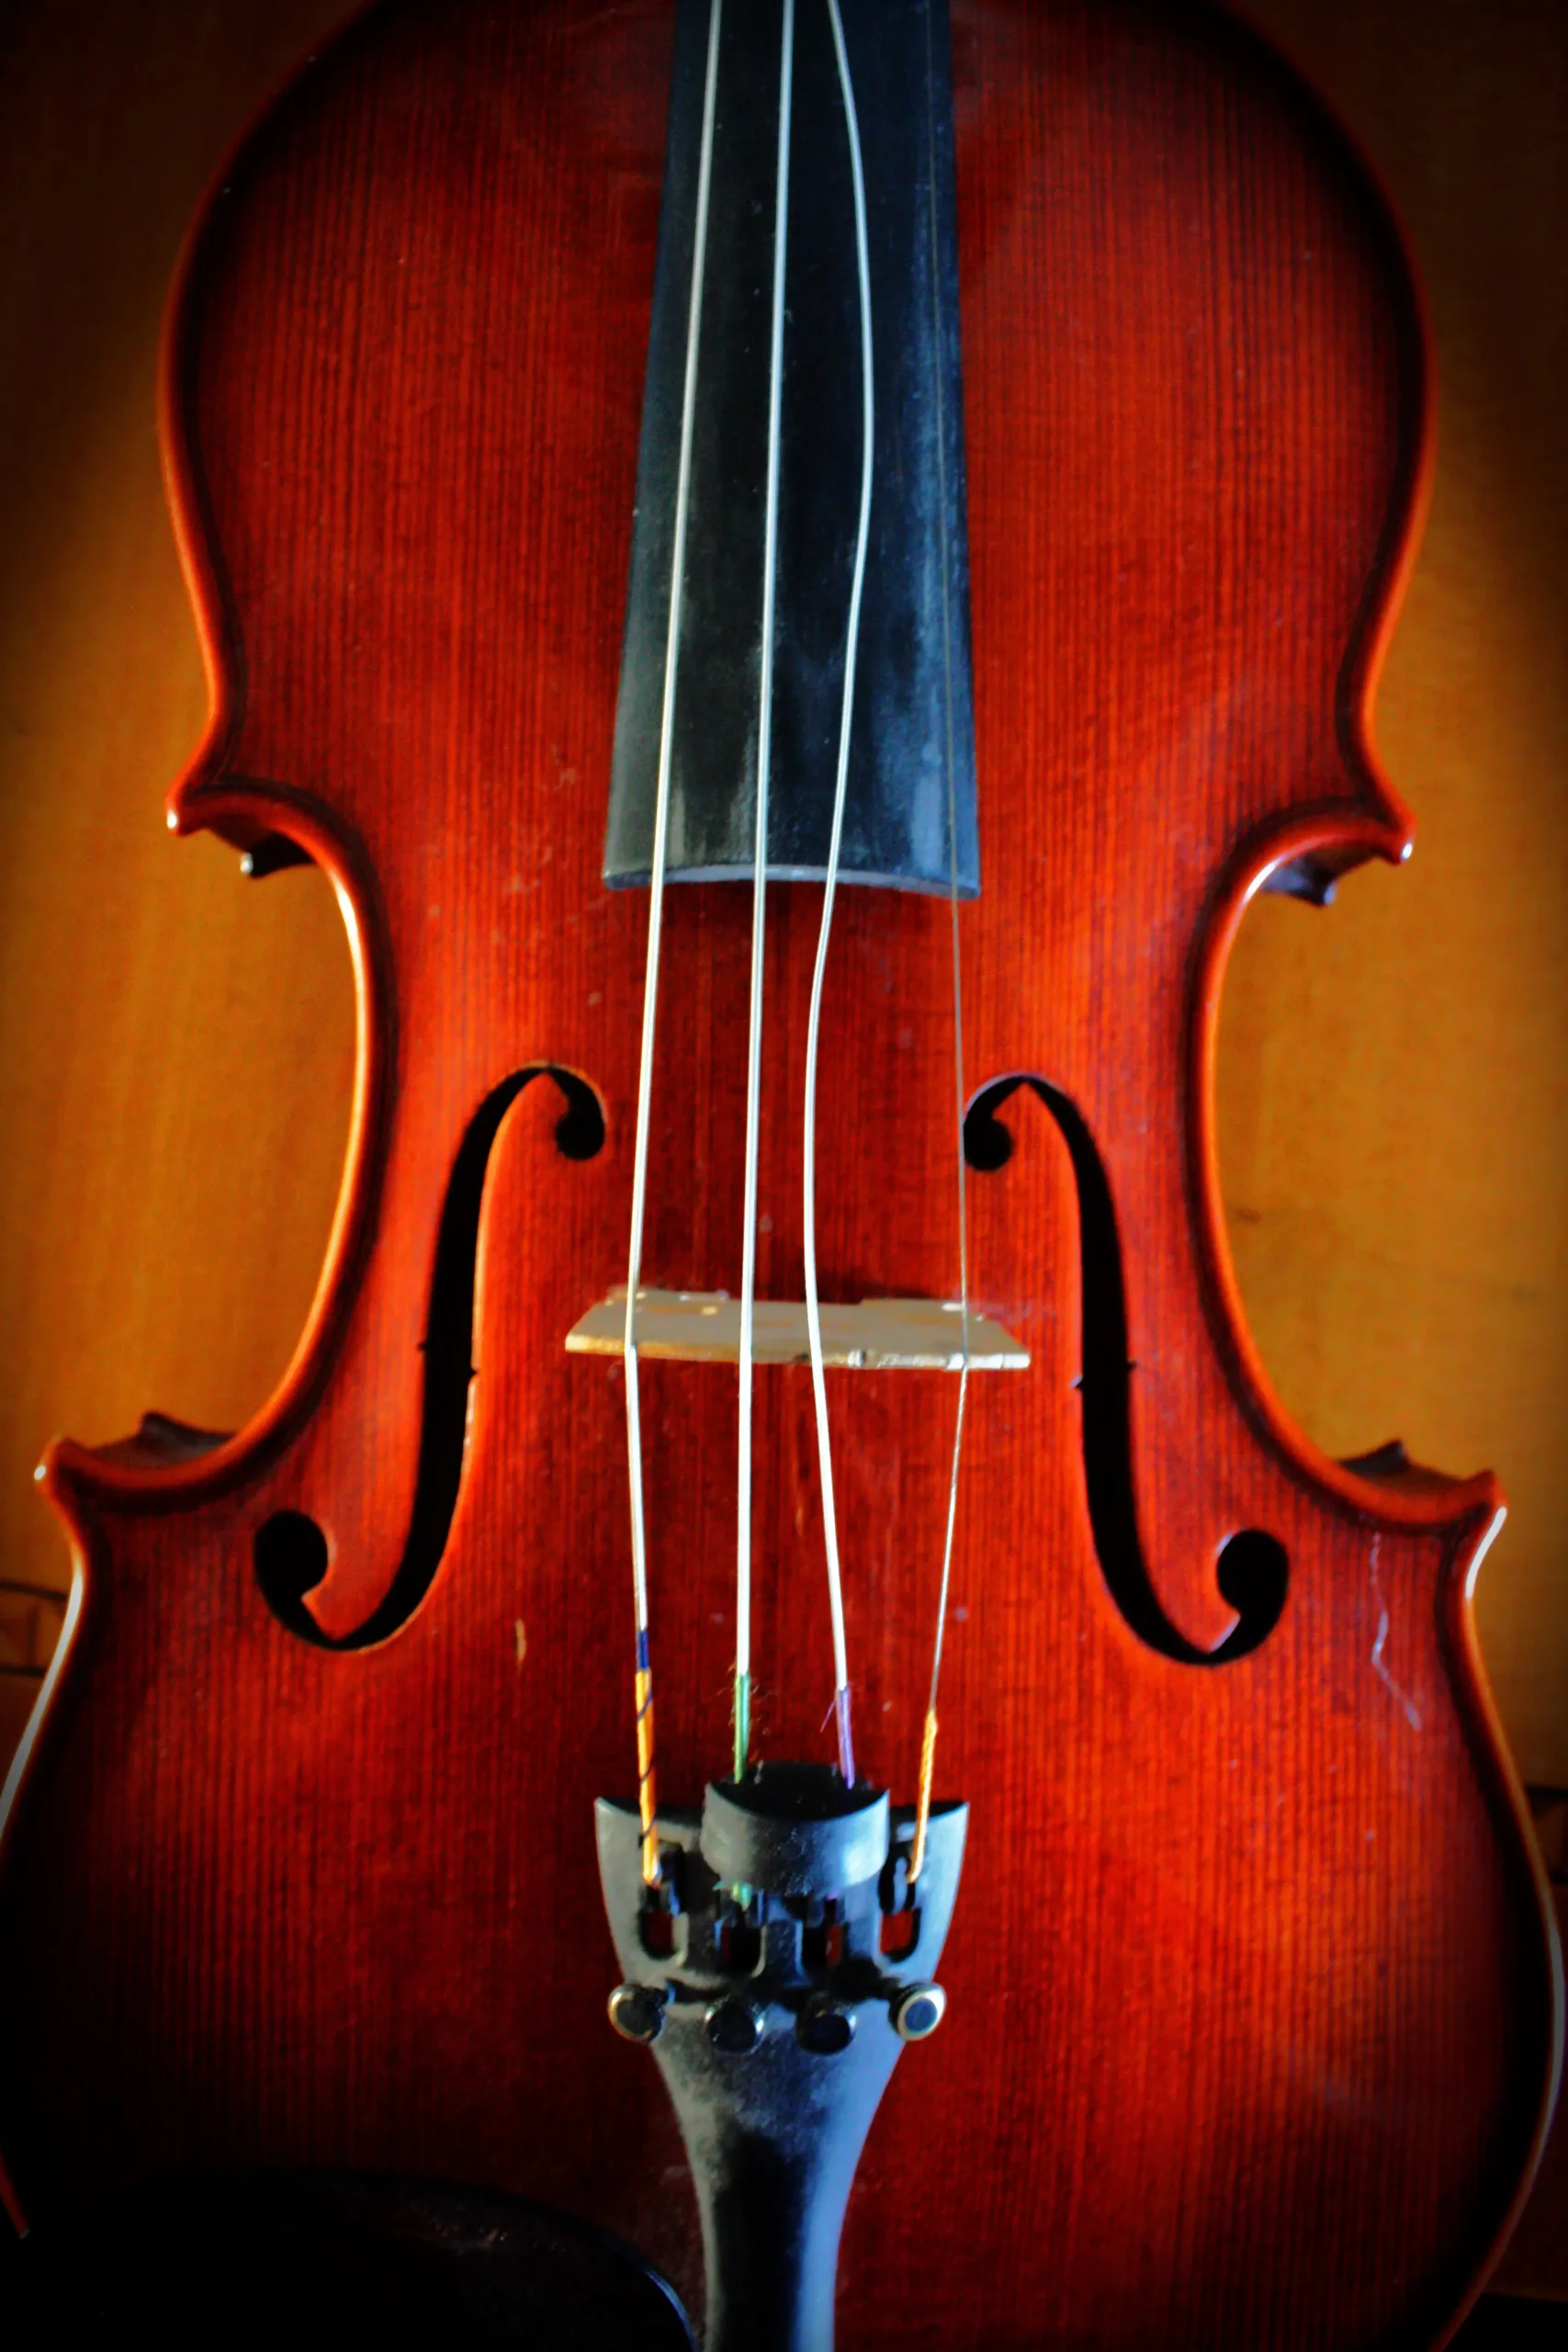 broken violin string - Does it hurt when a violin string breaks